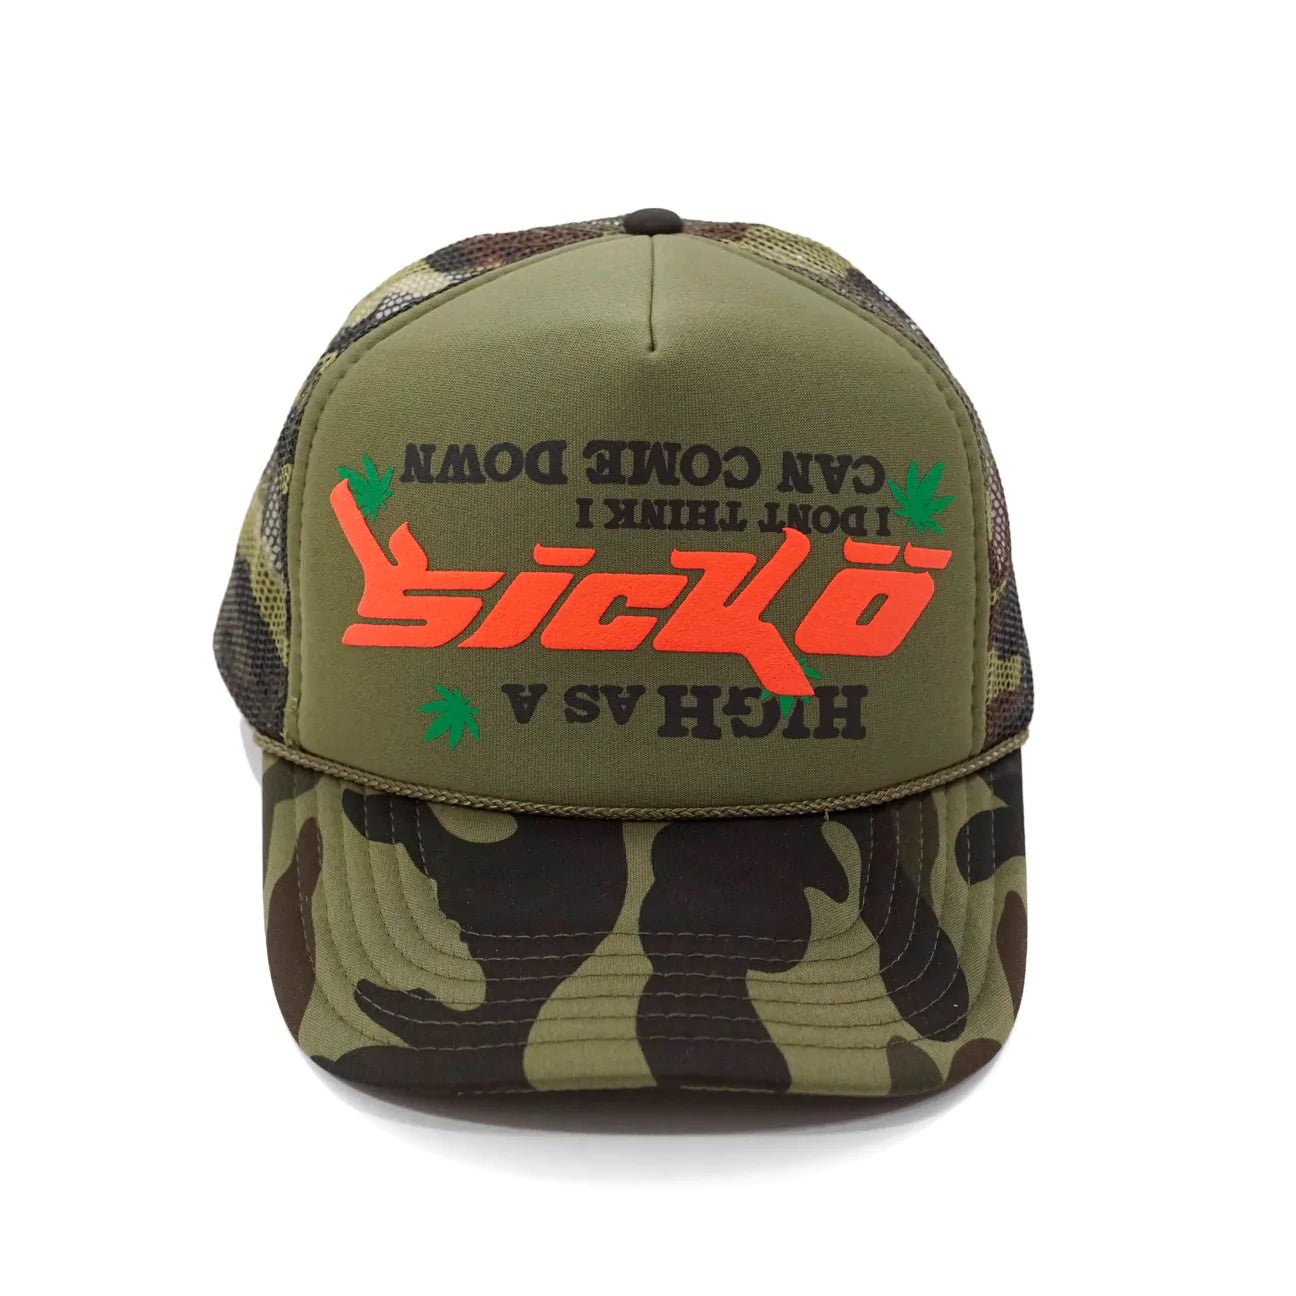 Sicko Laundry High Trucker Hat 2 - Dark Camo - Supra Sneakers